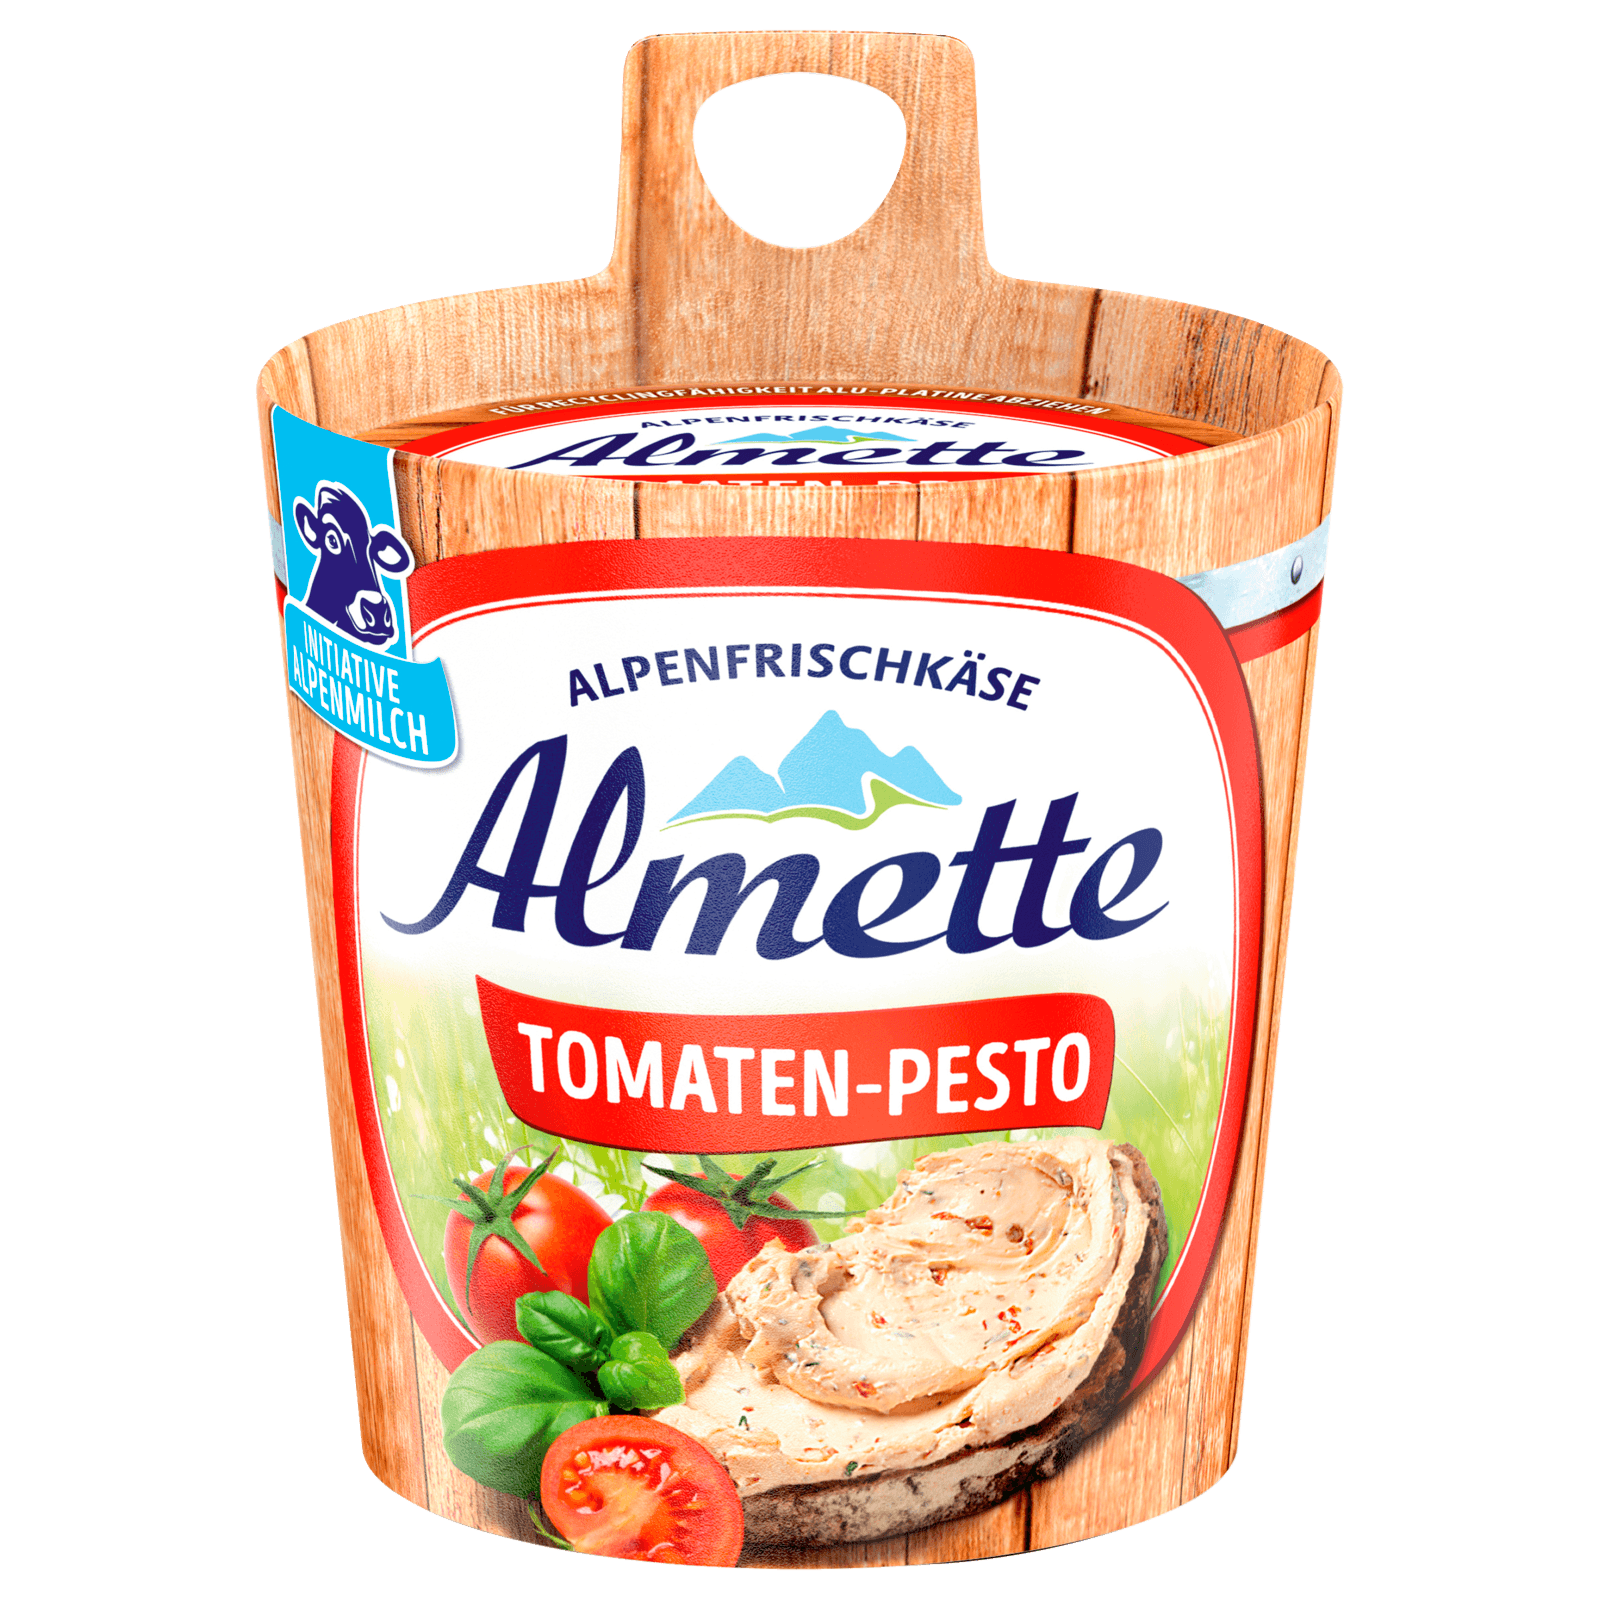 Almette Tomate-Pesto 150g  für 1.99 EUR